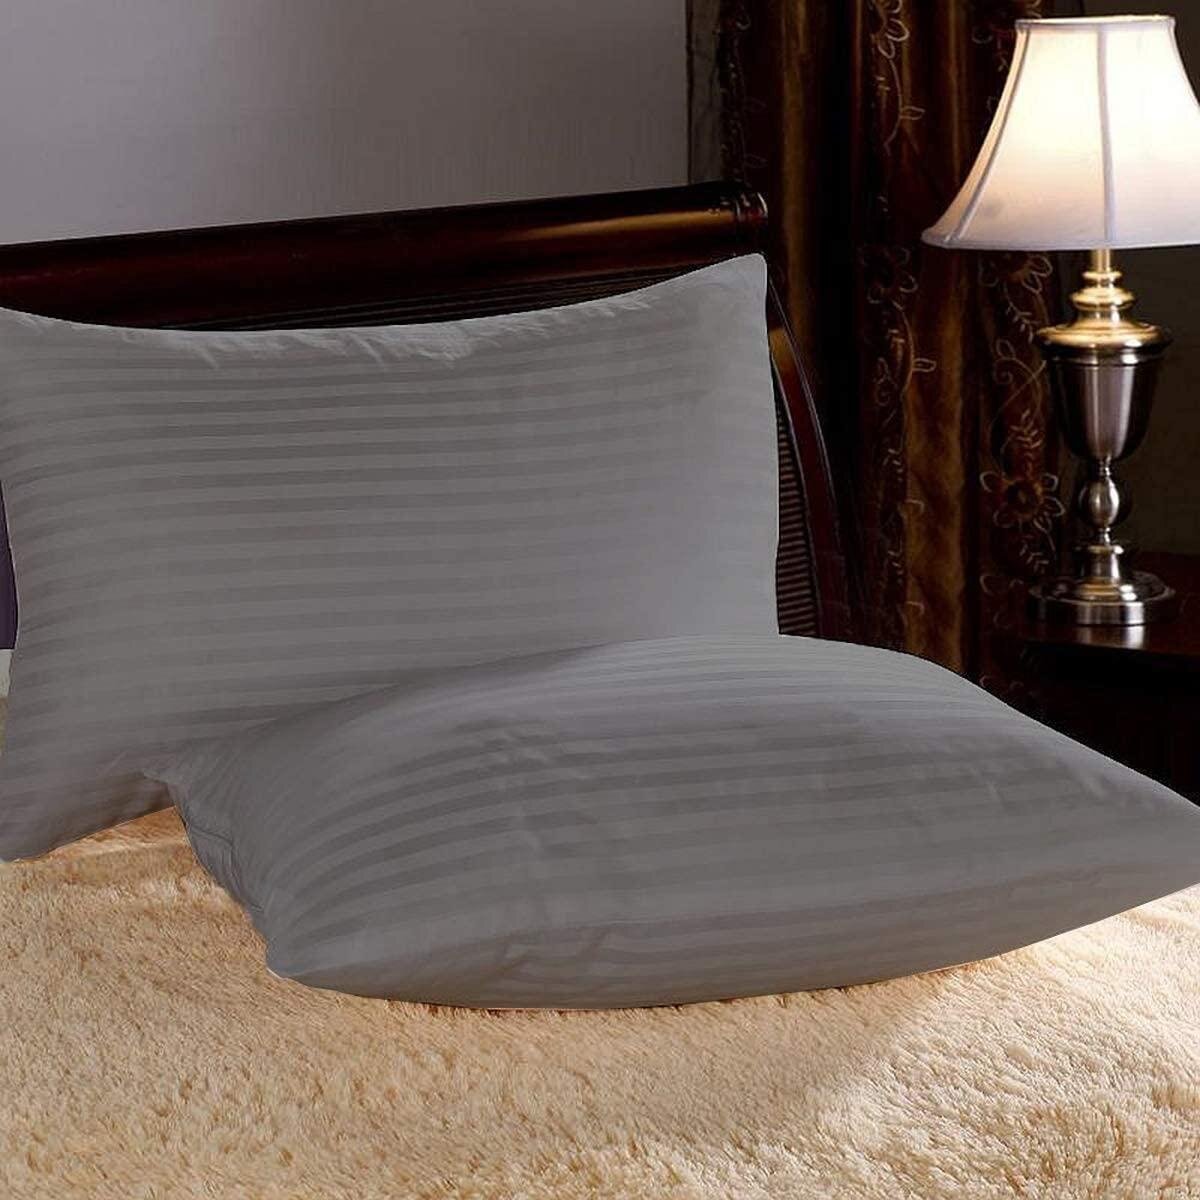 PREMIUM QUALITY Bed Pillow Case Cotton 400 Tc with Set Of 2 White Pillowcase 